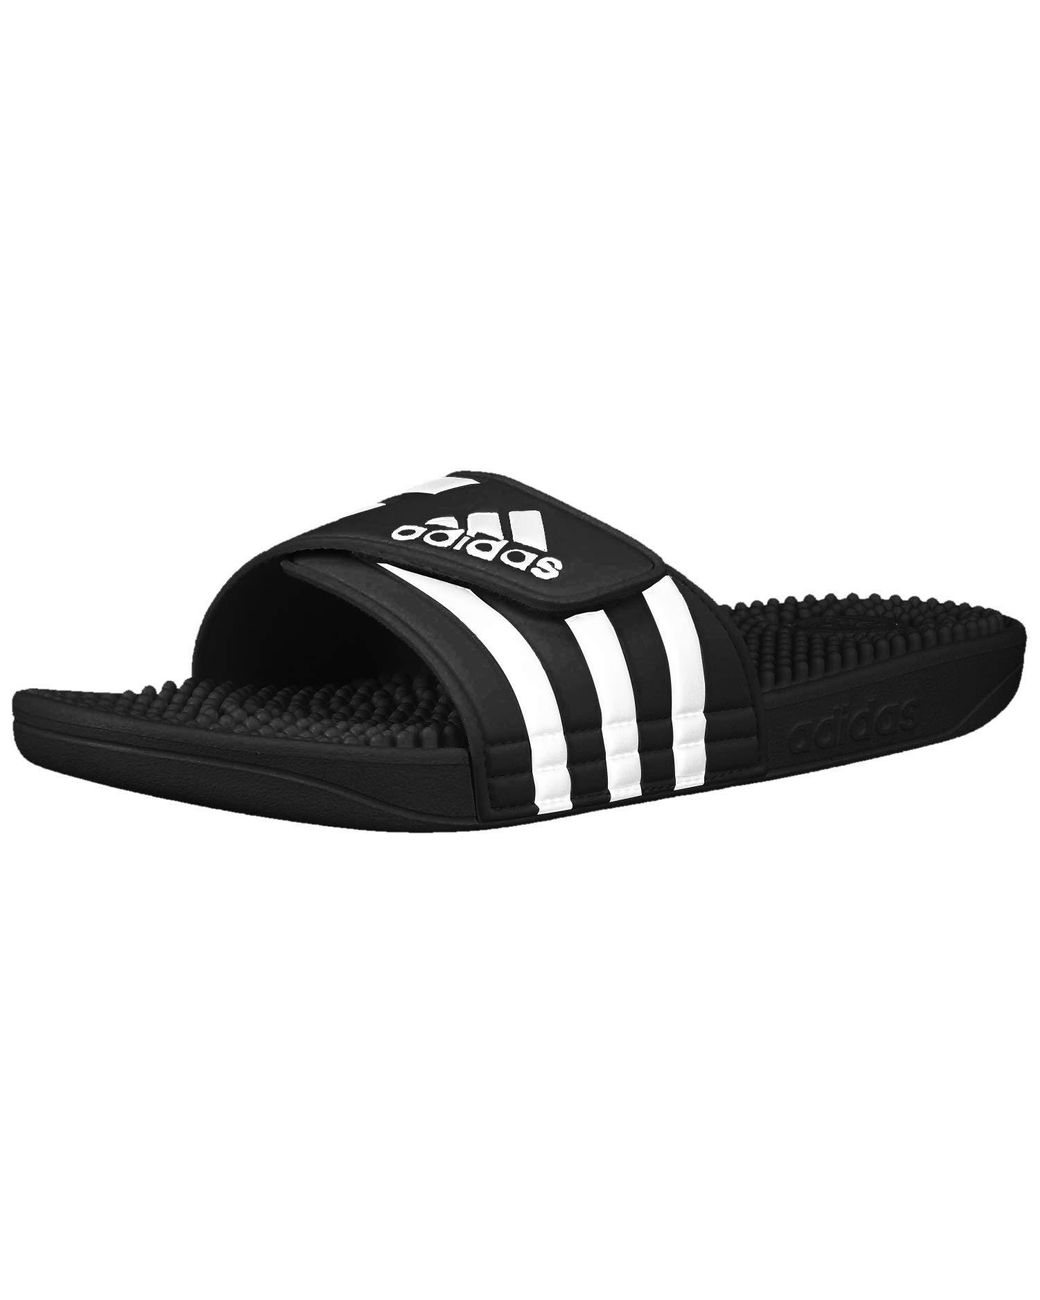 adidas Adissage Slides Sandal in Black | Lyst